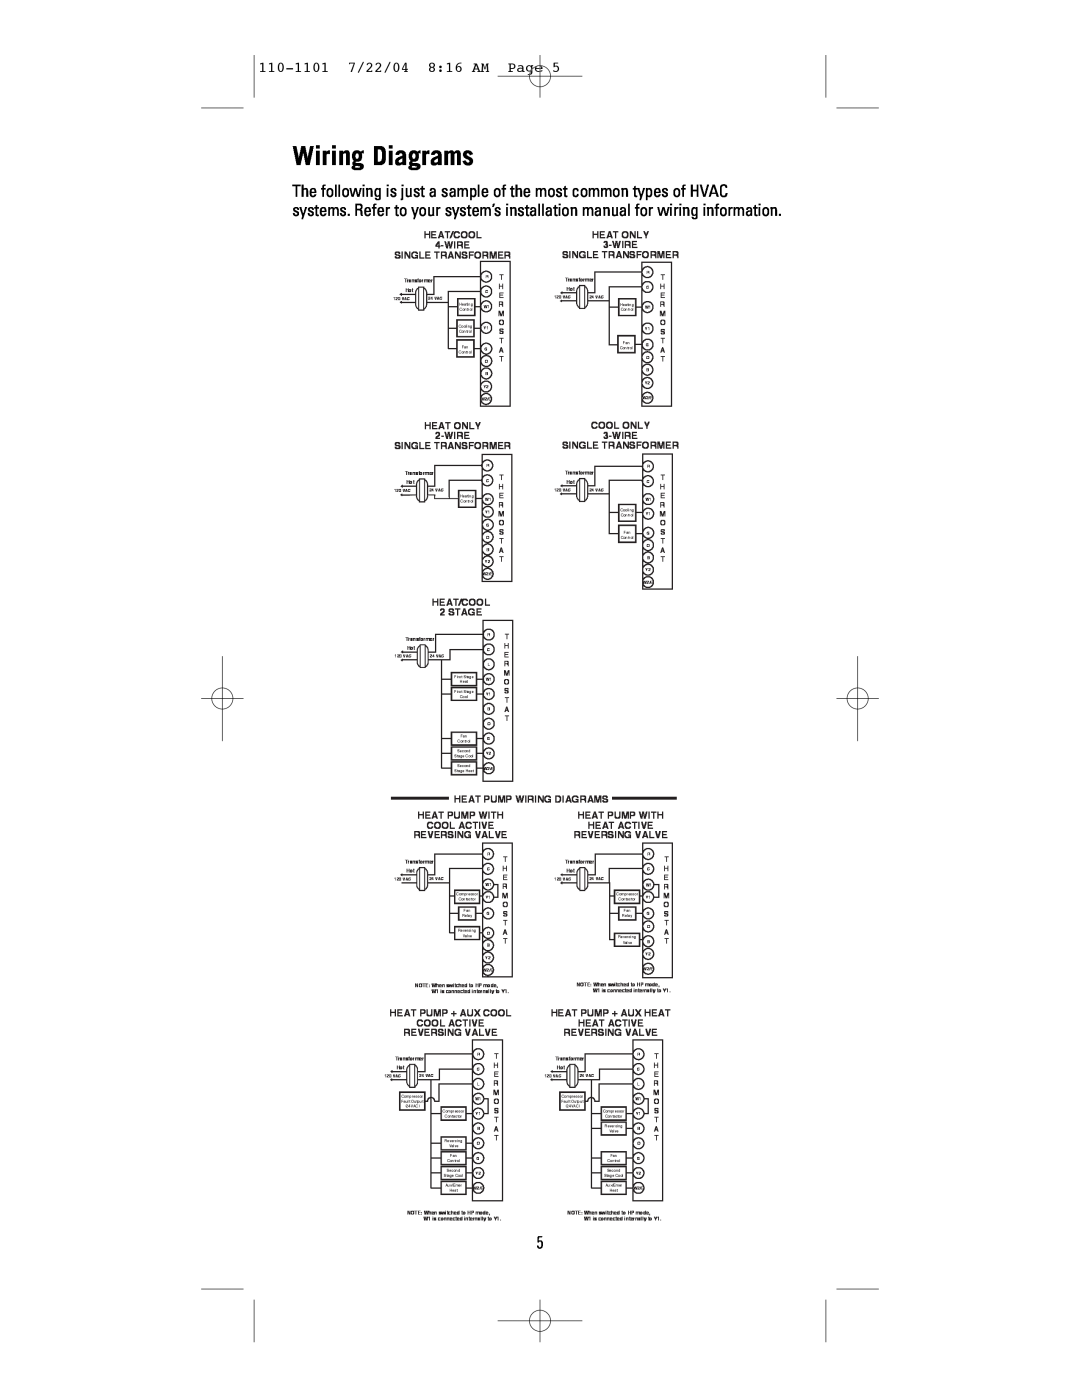 NewAir 8625 user manual Wiring Diagrams, 110-1101 7/22/04 816 AM Page 